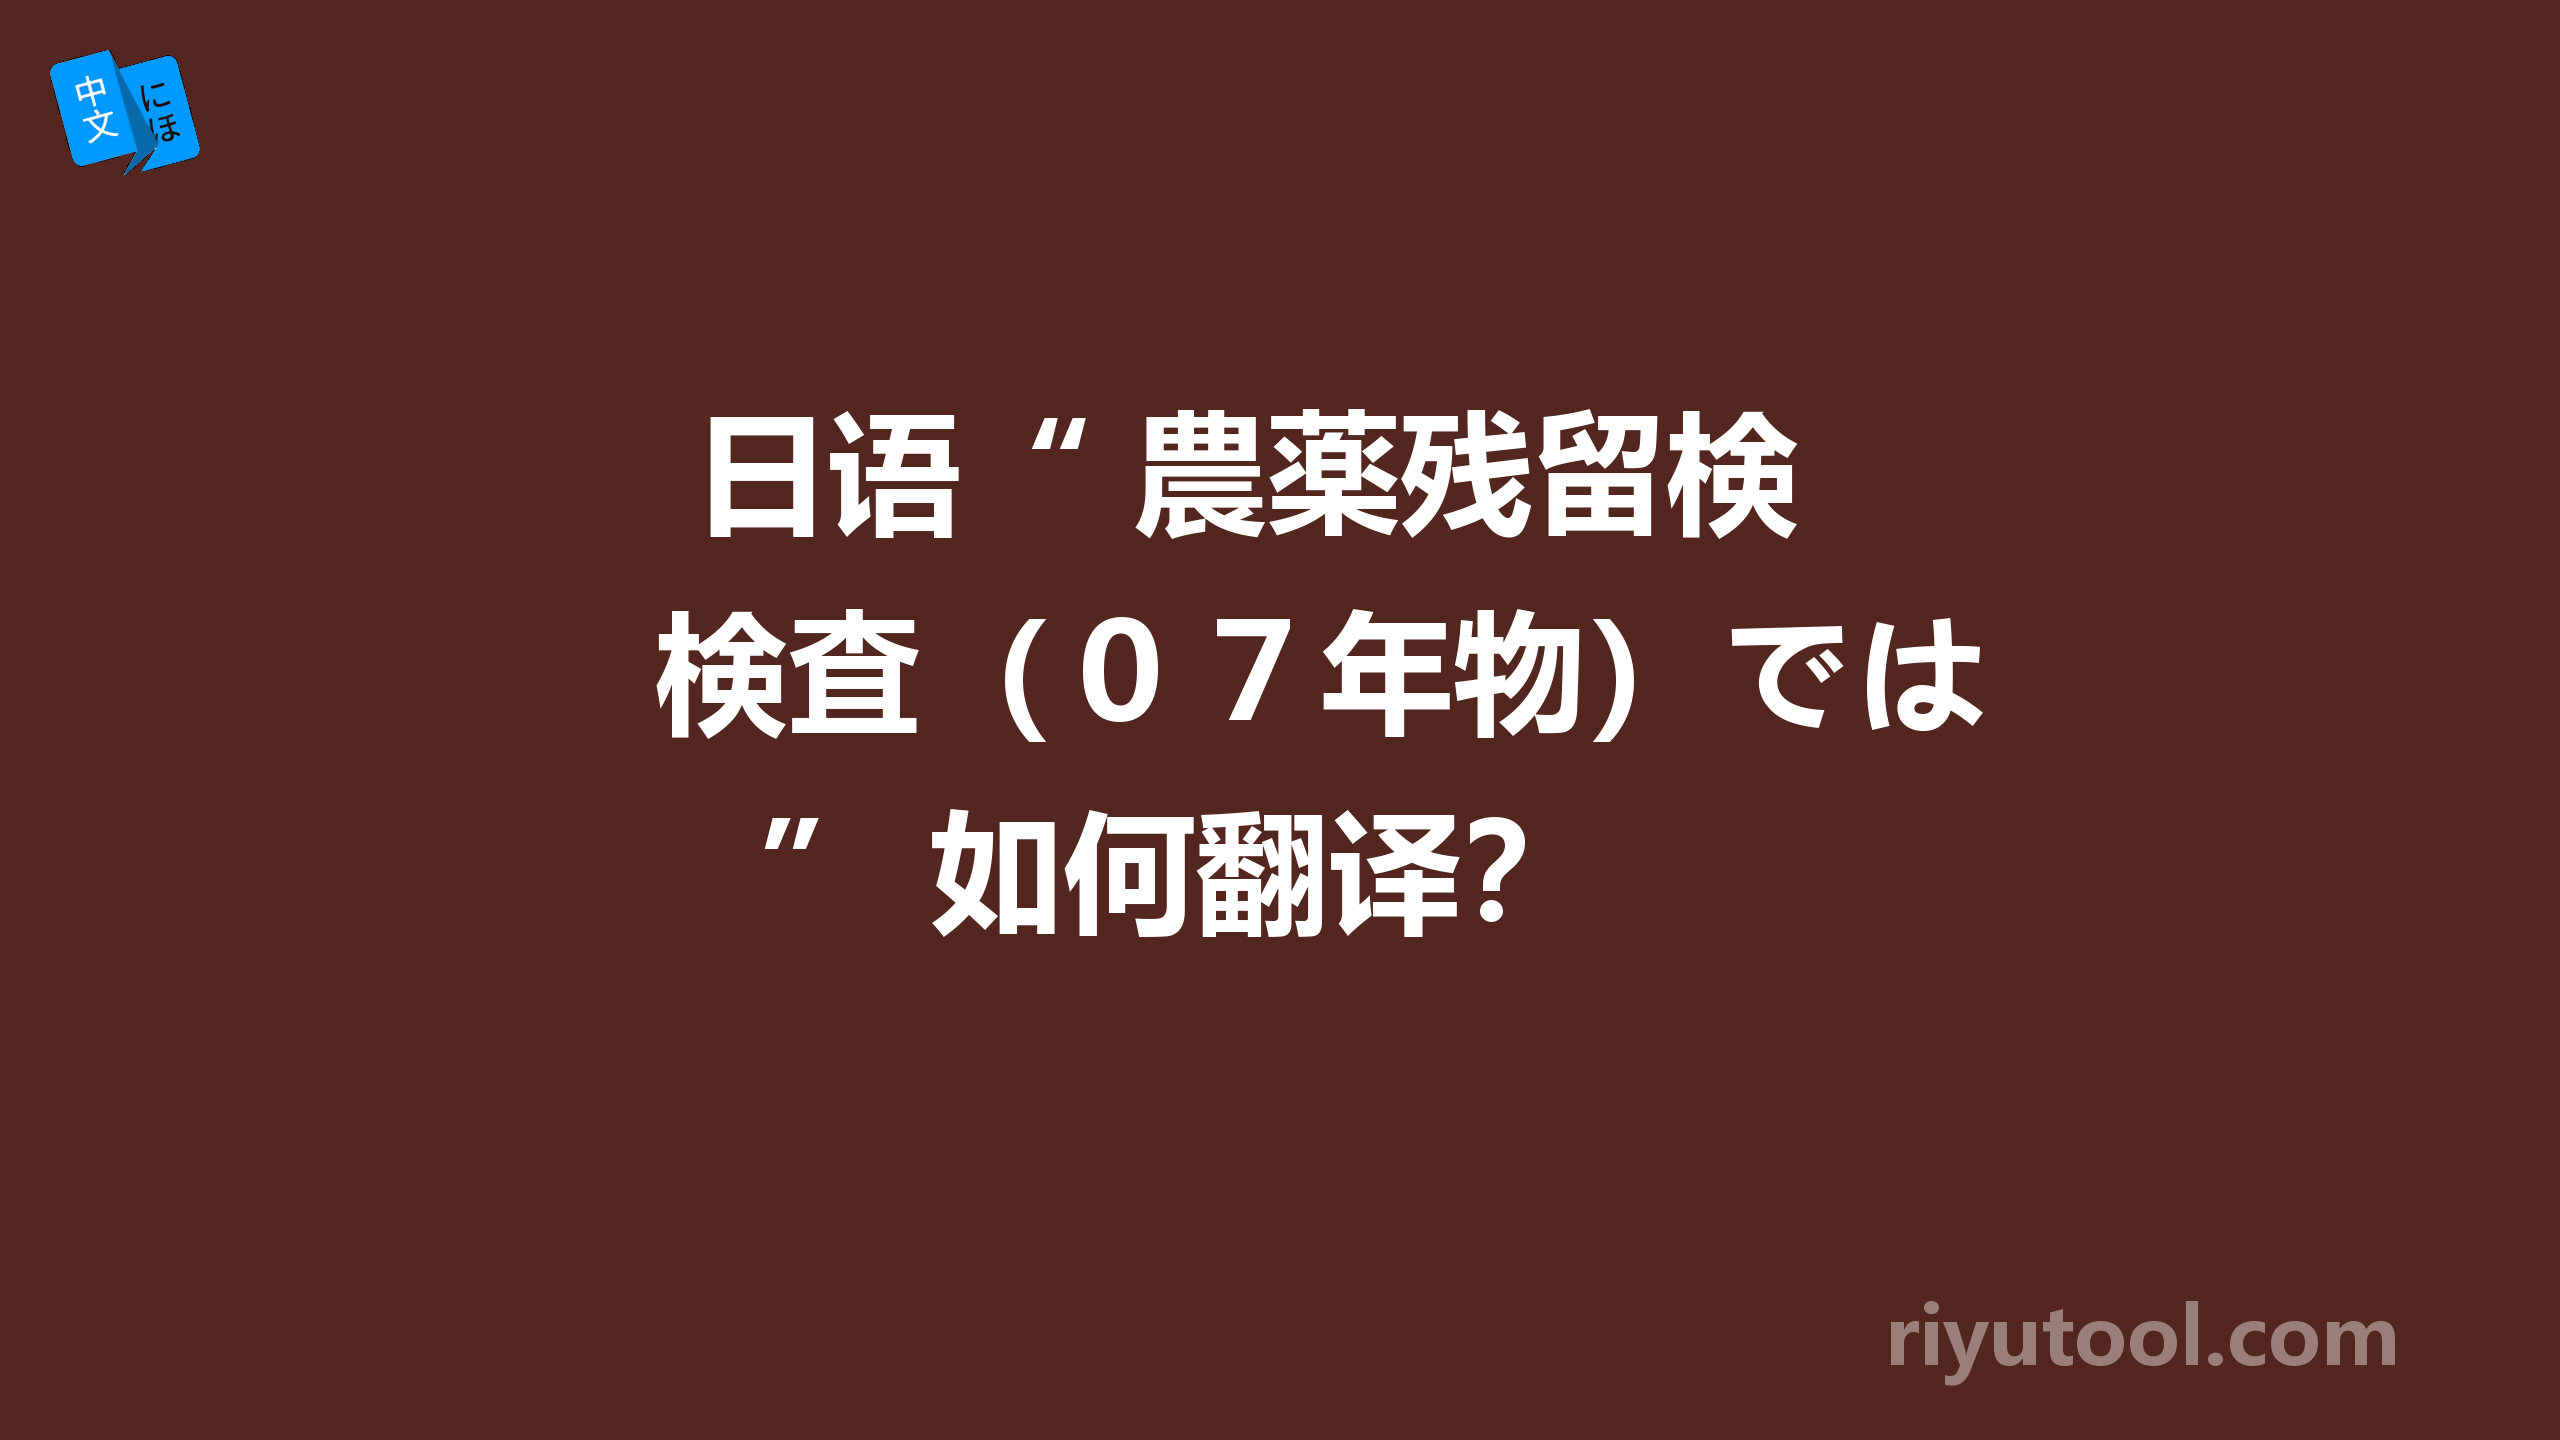  日语“ 農薬残留検査（０７年物）では ” 如何翻译？ 